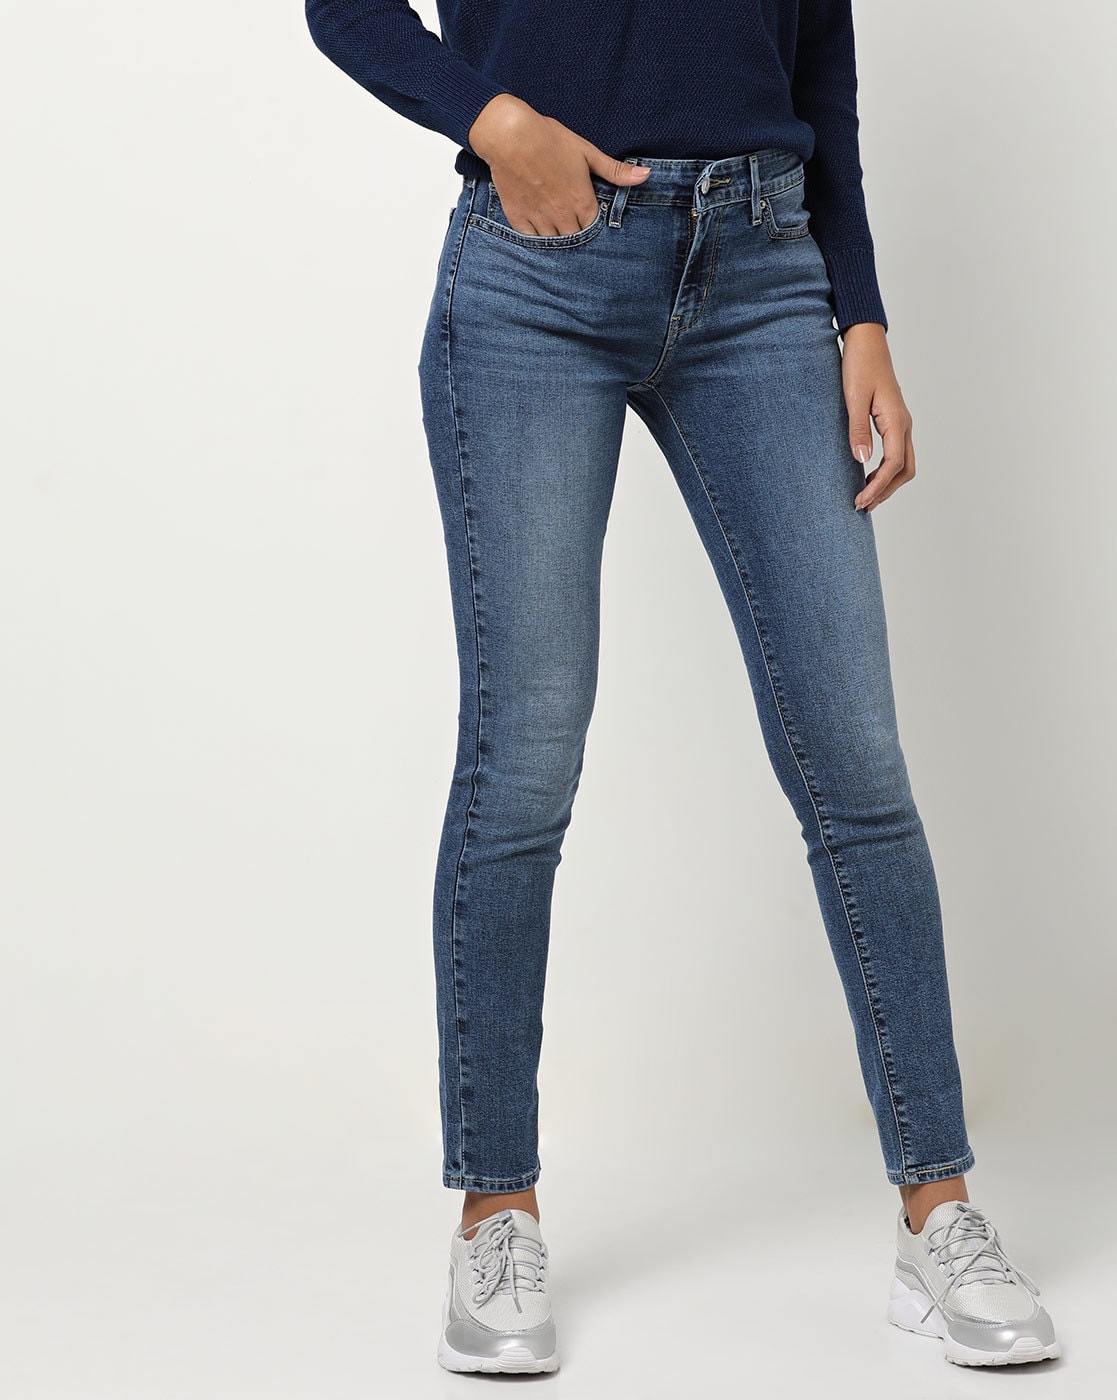 levi's 711 skinny jeans online india